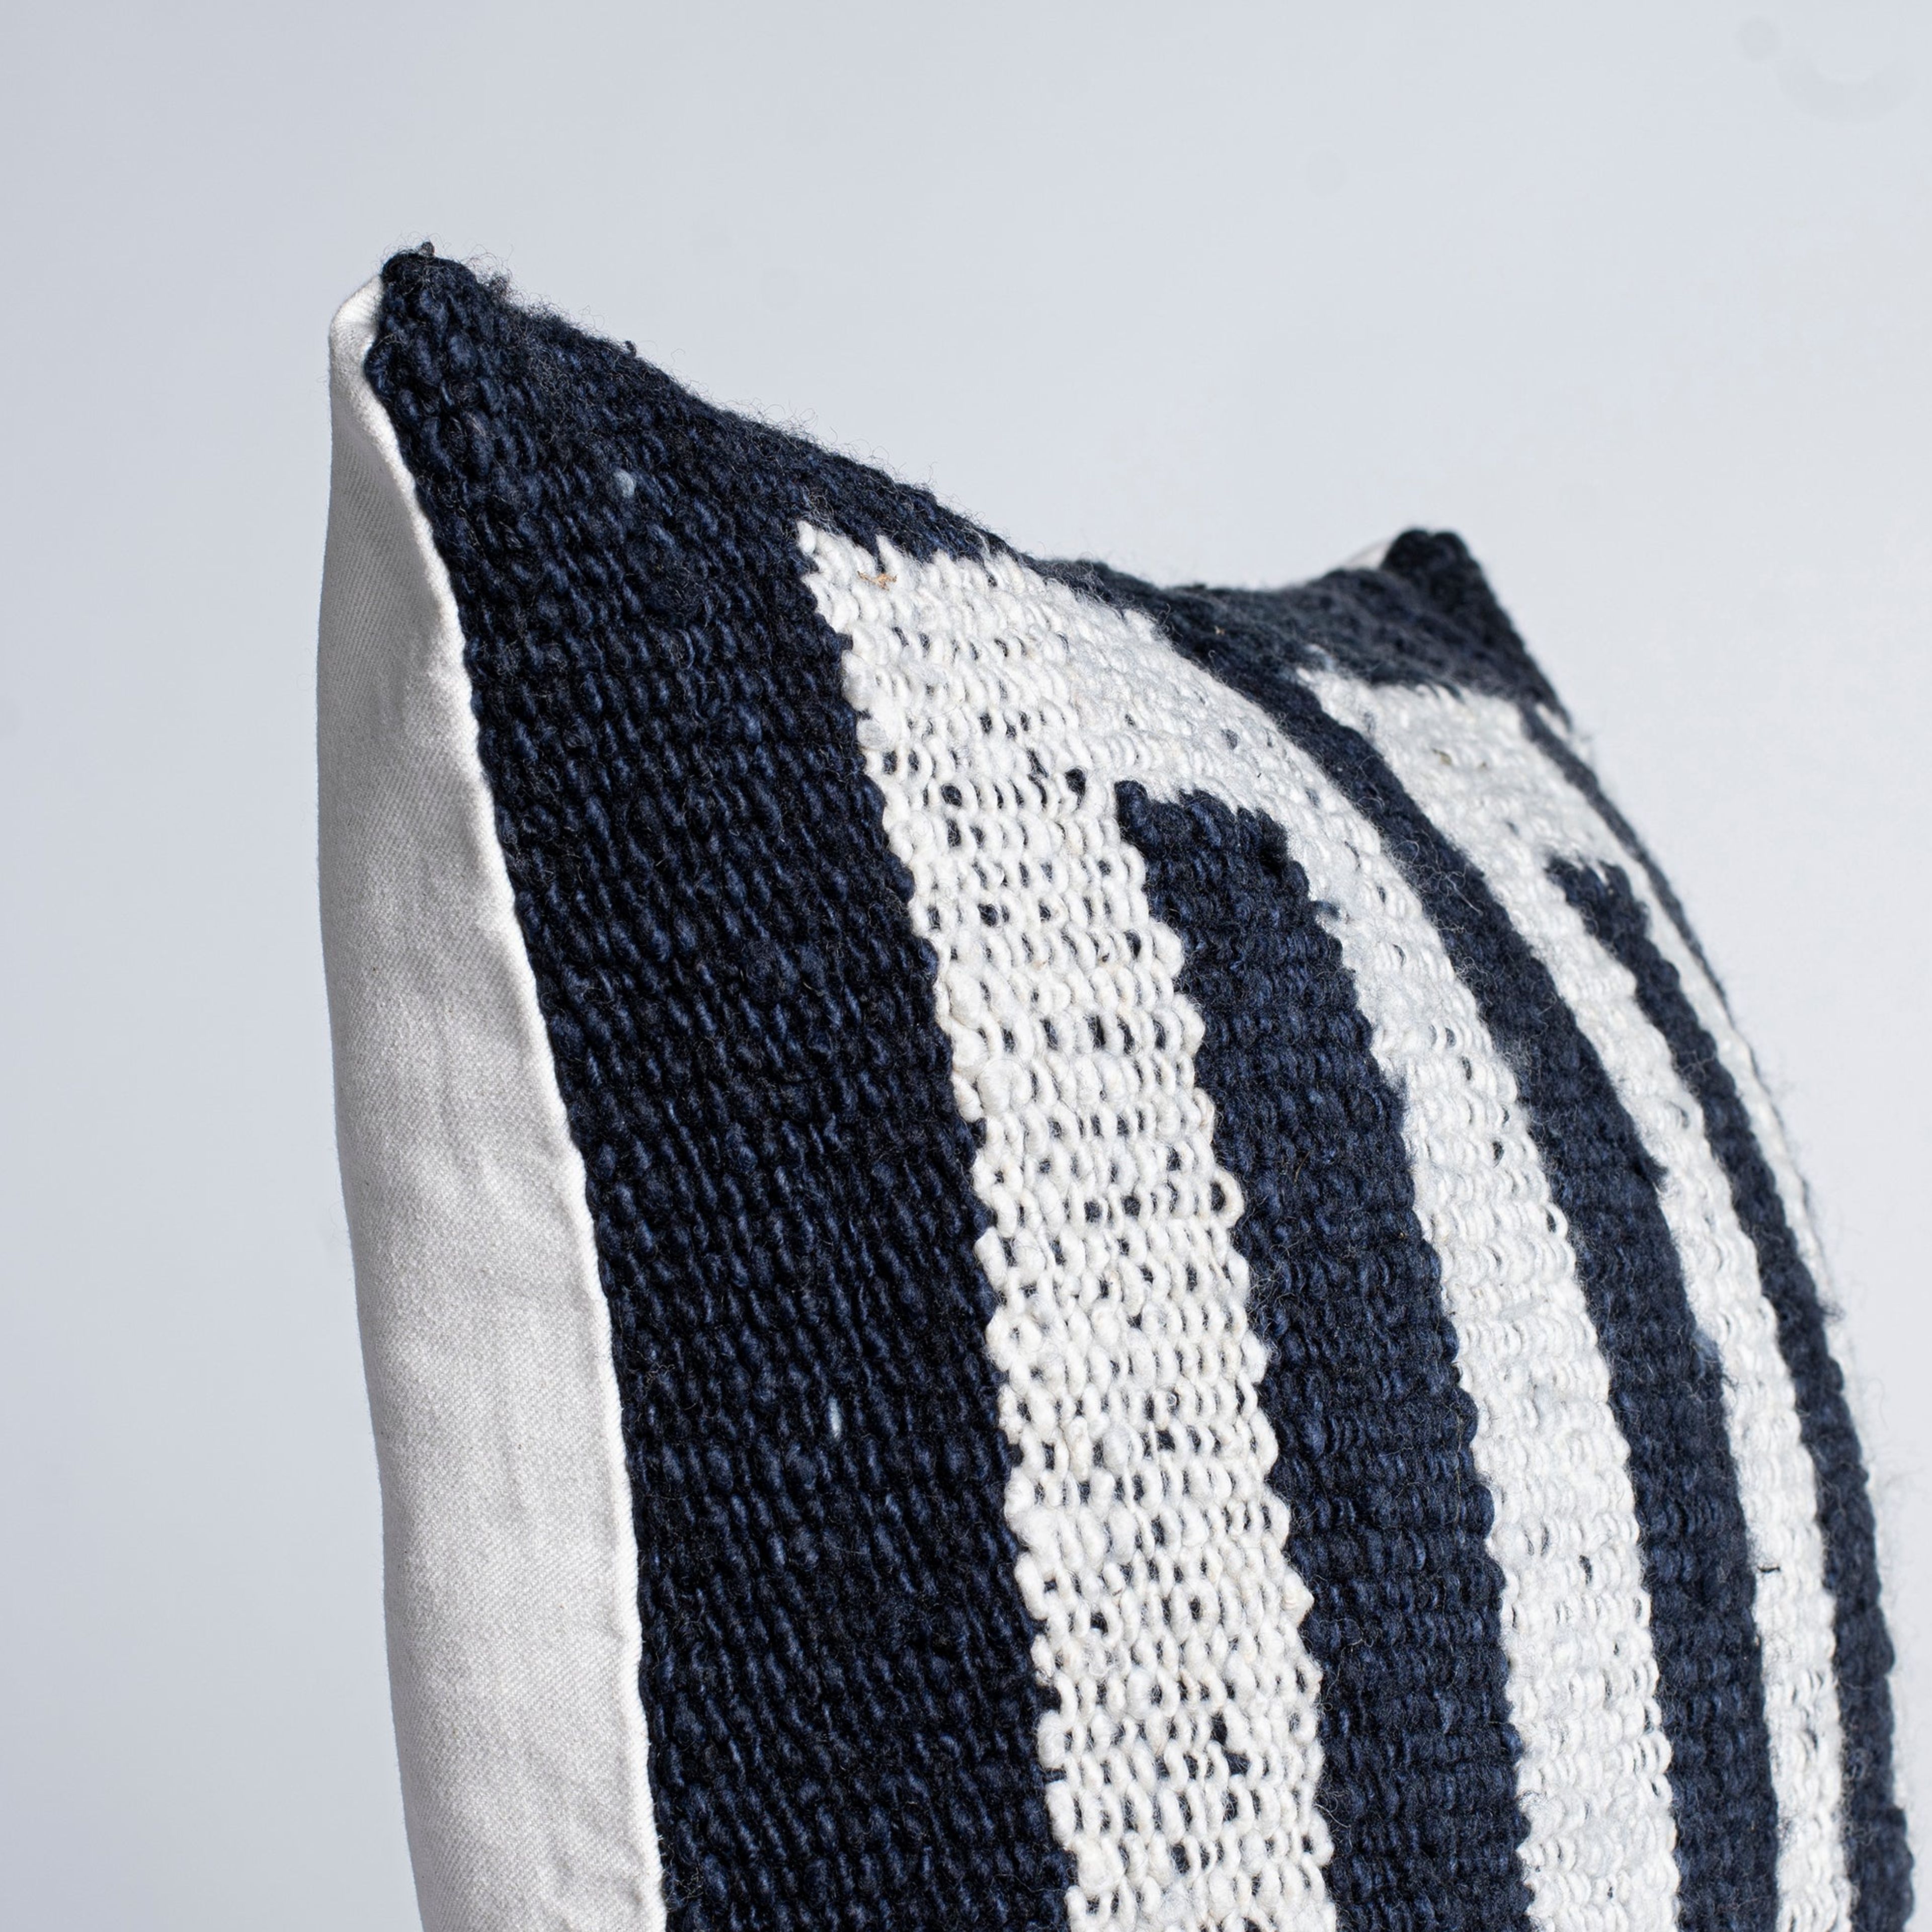 Indigo Pillow Cover in Organic Wool Hand-Dyed Sendero 21*21